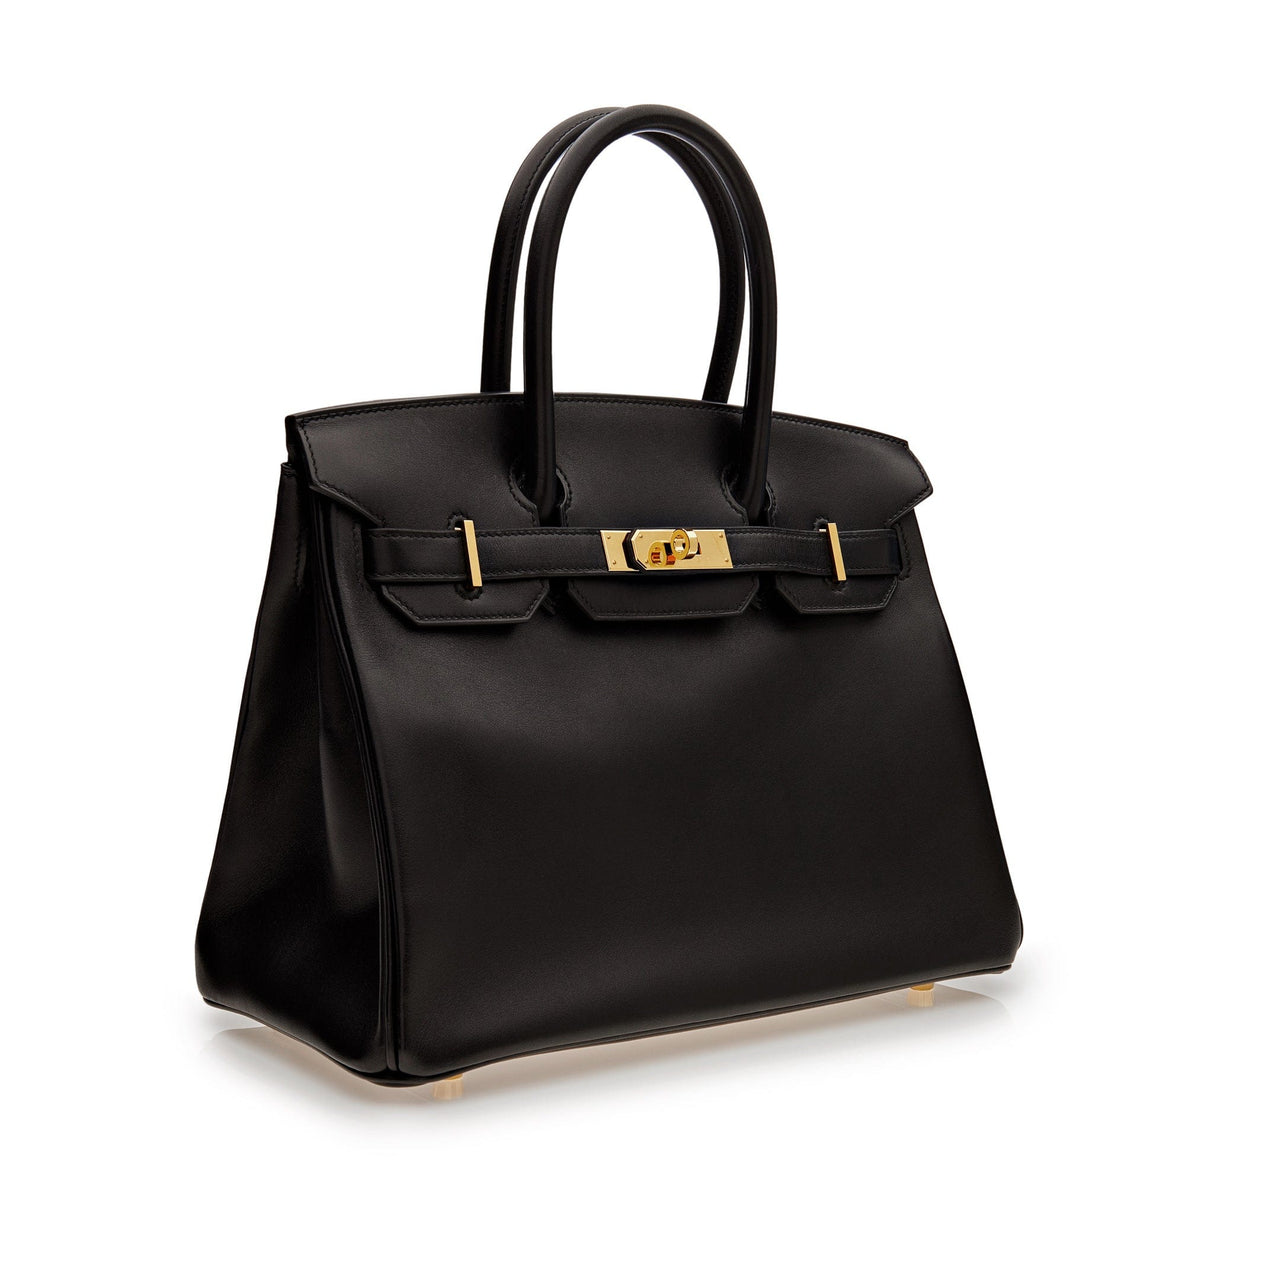 Alexander Wang Bags & Handbags for Women for Sale - eBay